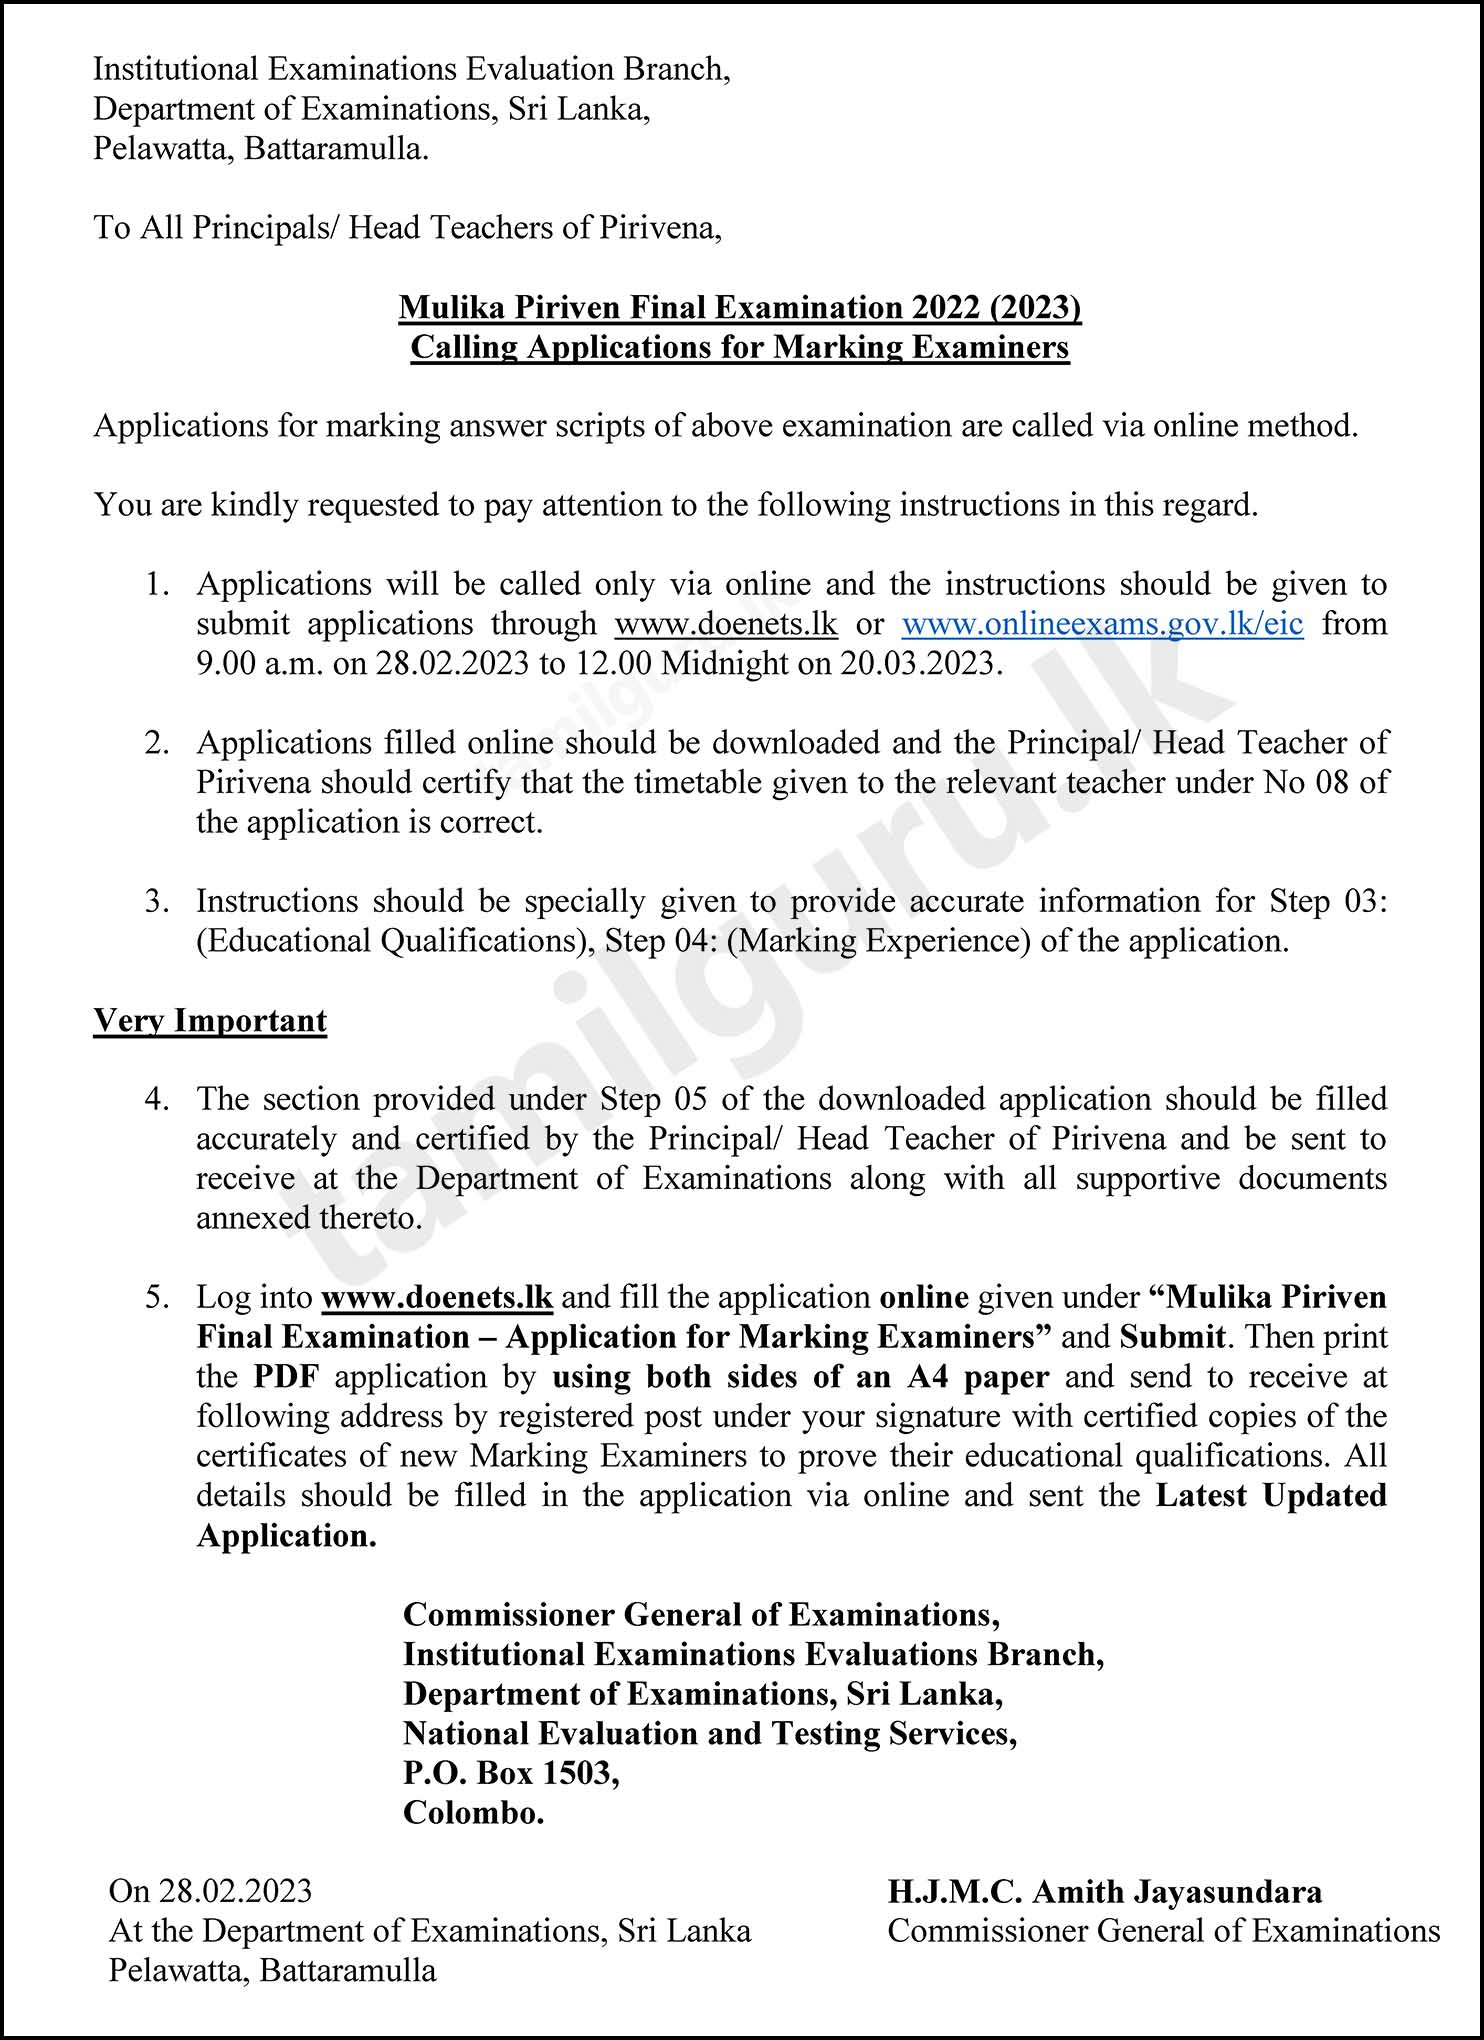 Paper Marking Application - Mulika Piriven Final Examination 2022 (2023)